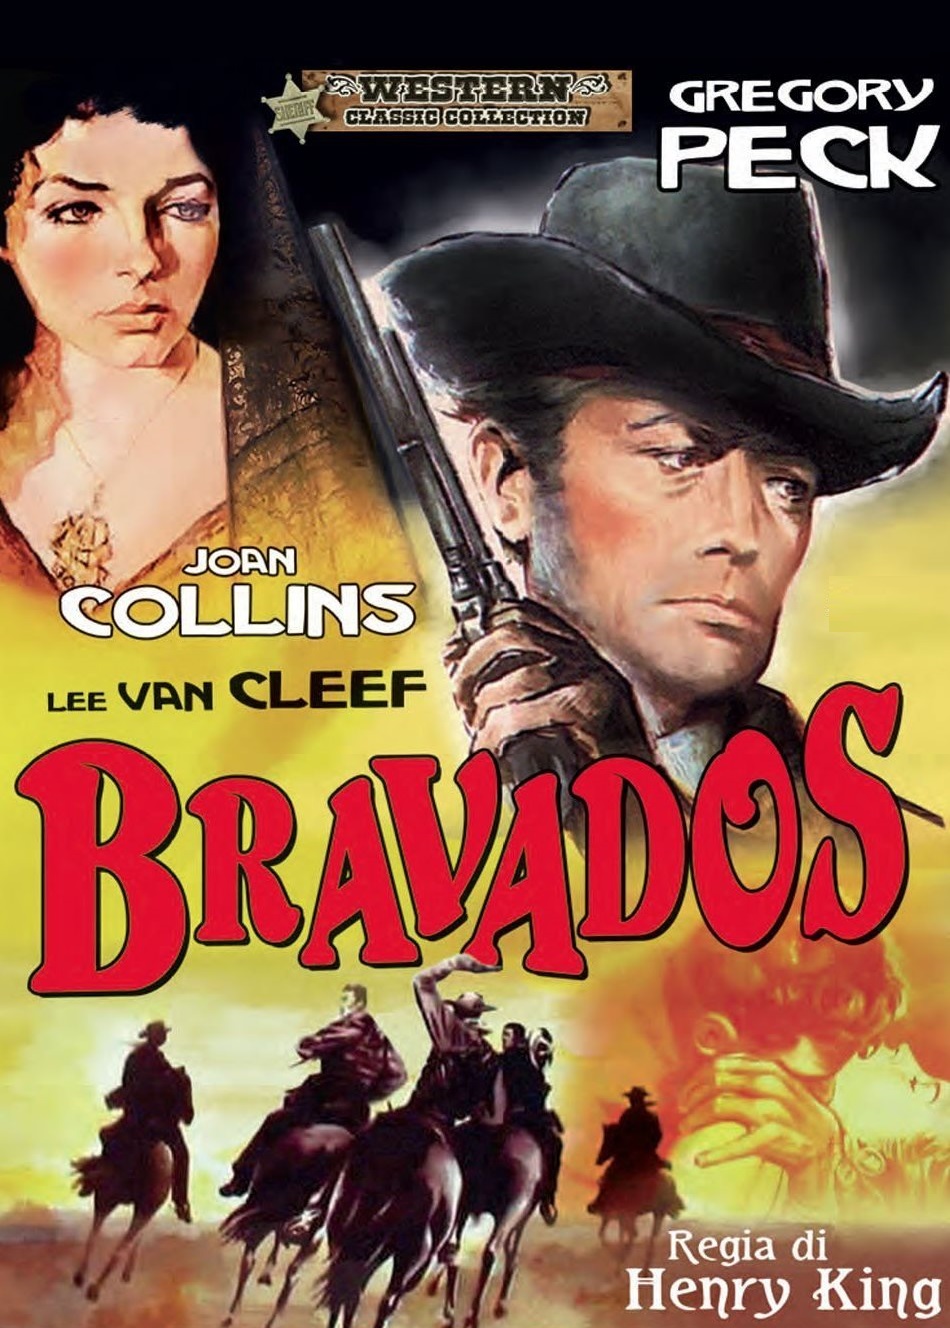 Bravados [HD] (1958)